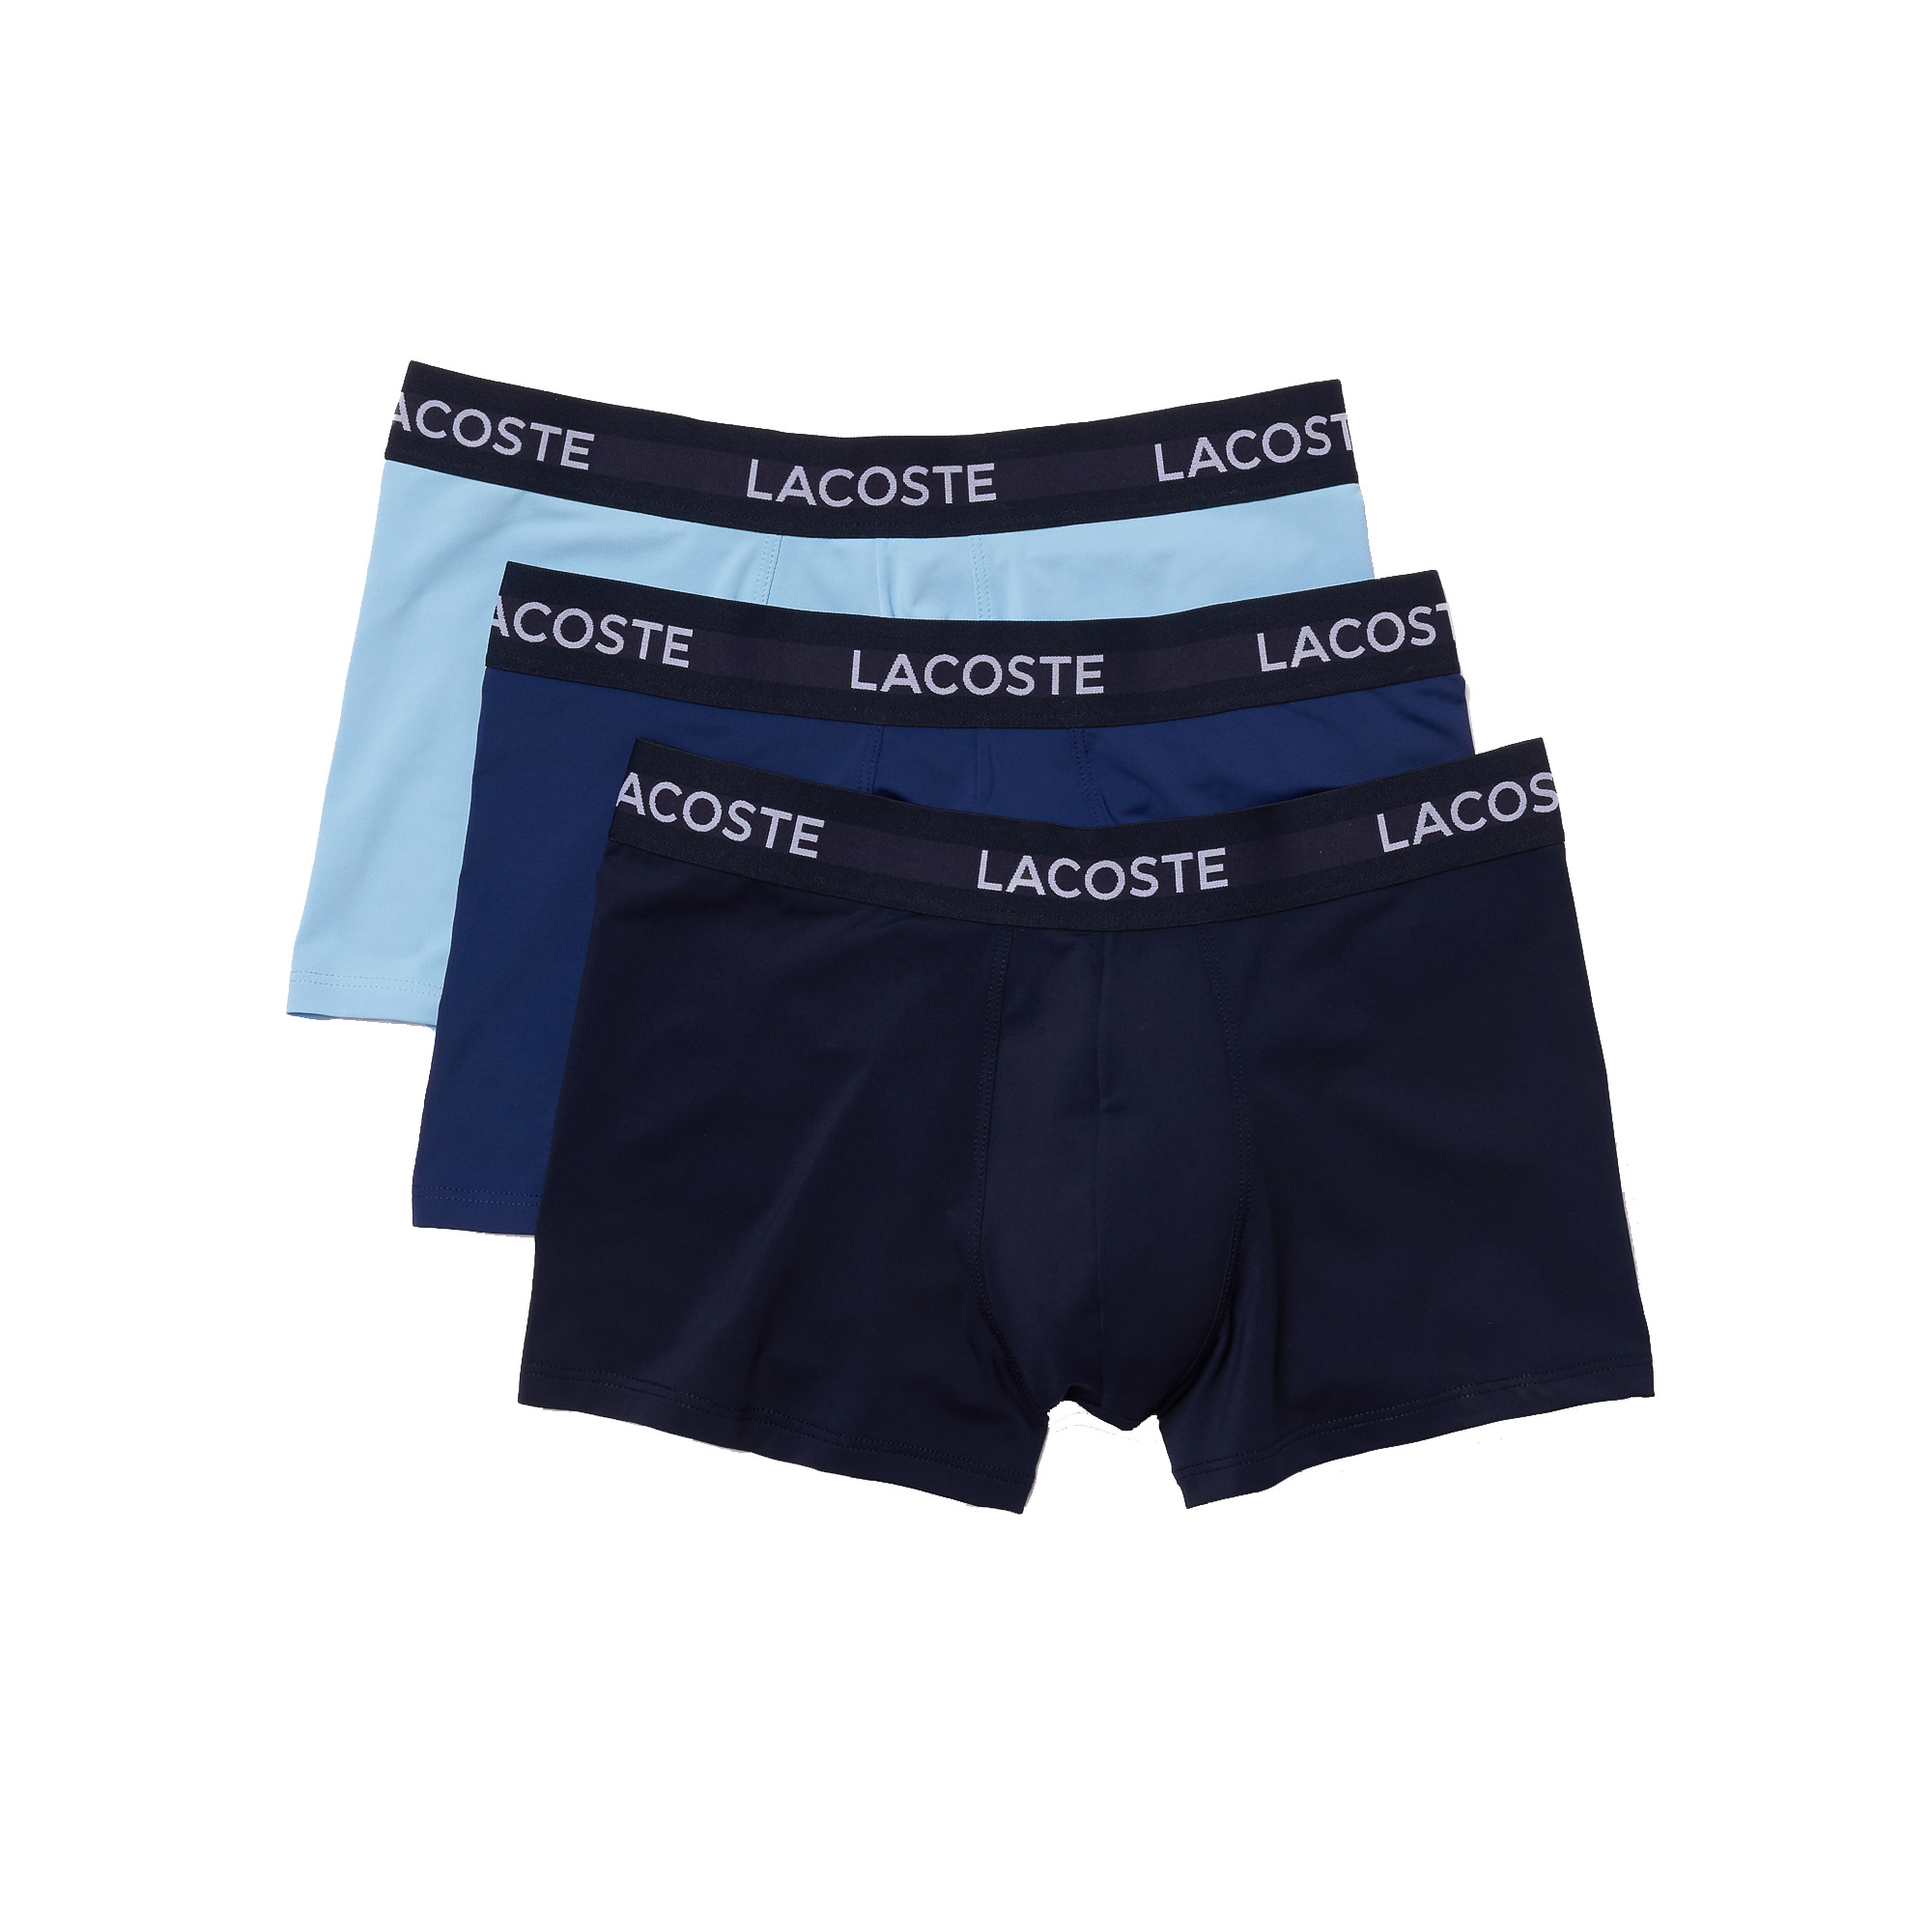 Lacoste Lacoste Boxershorts Heren Microfiber Blauw 3 Pack